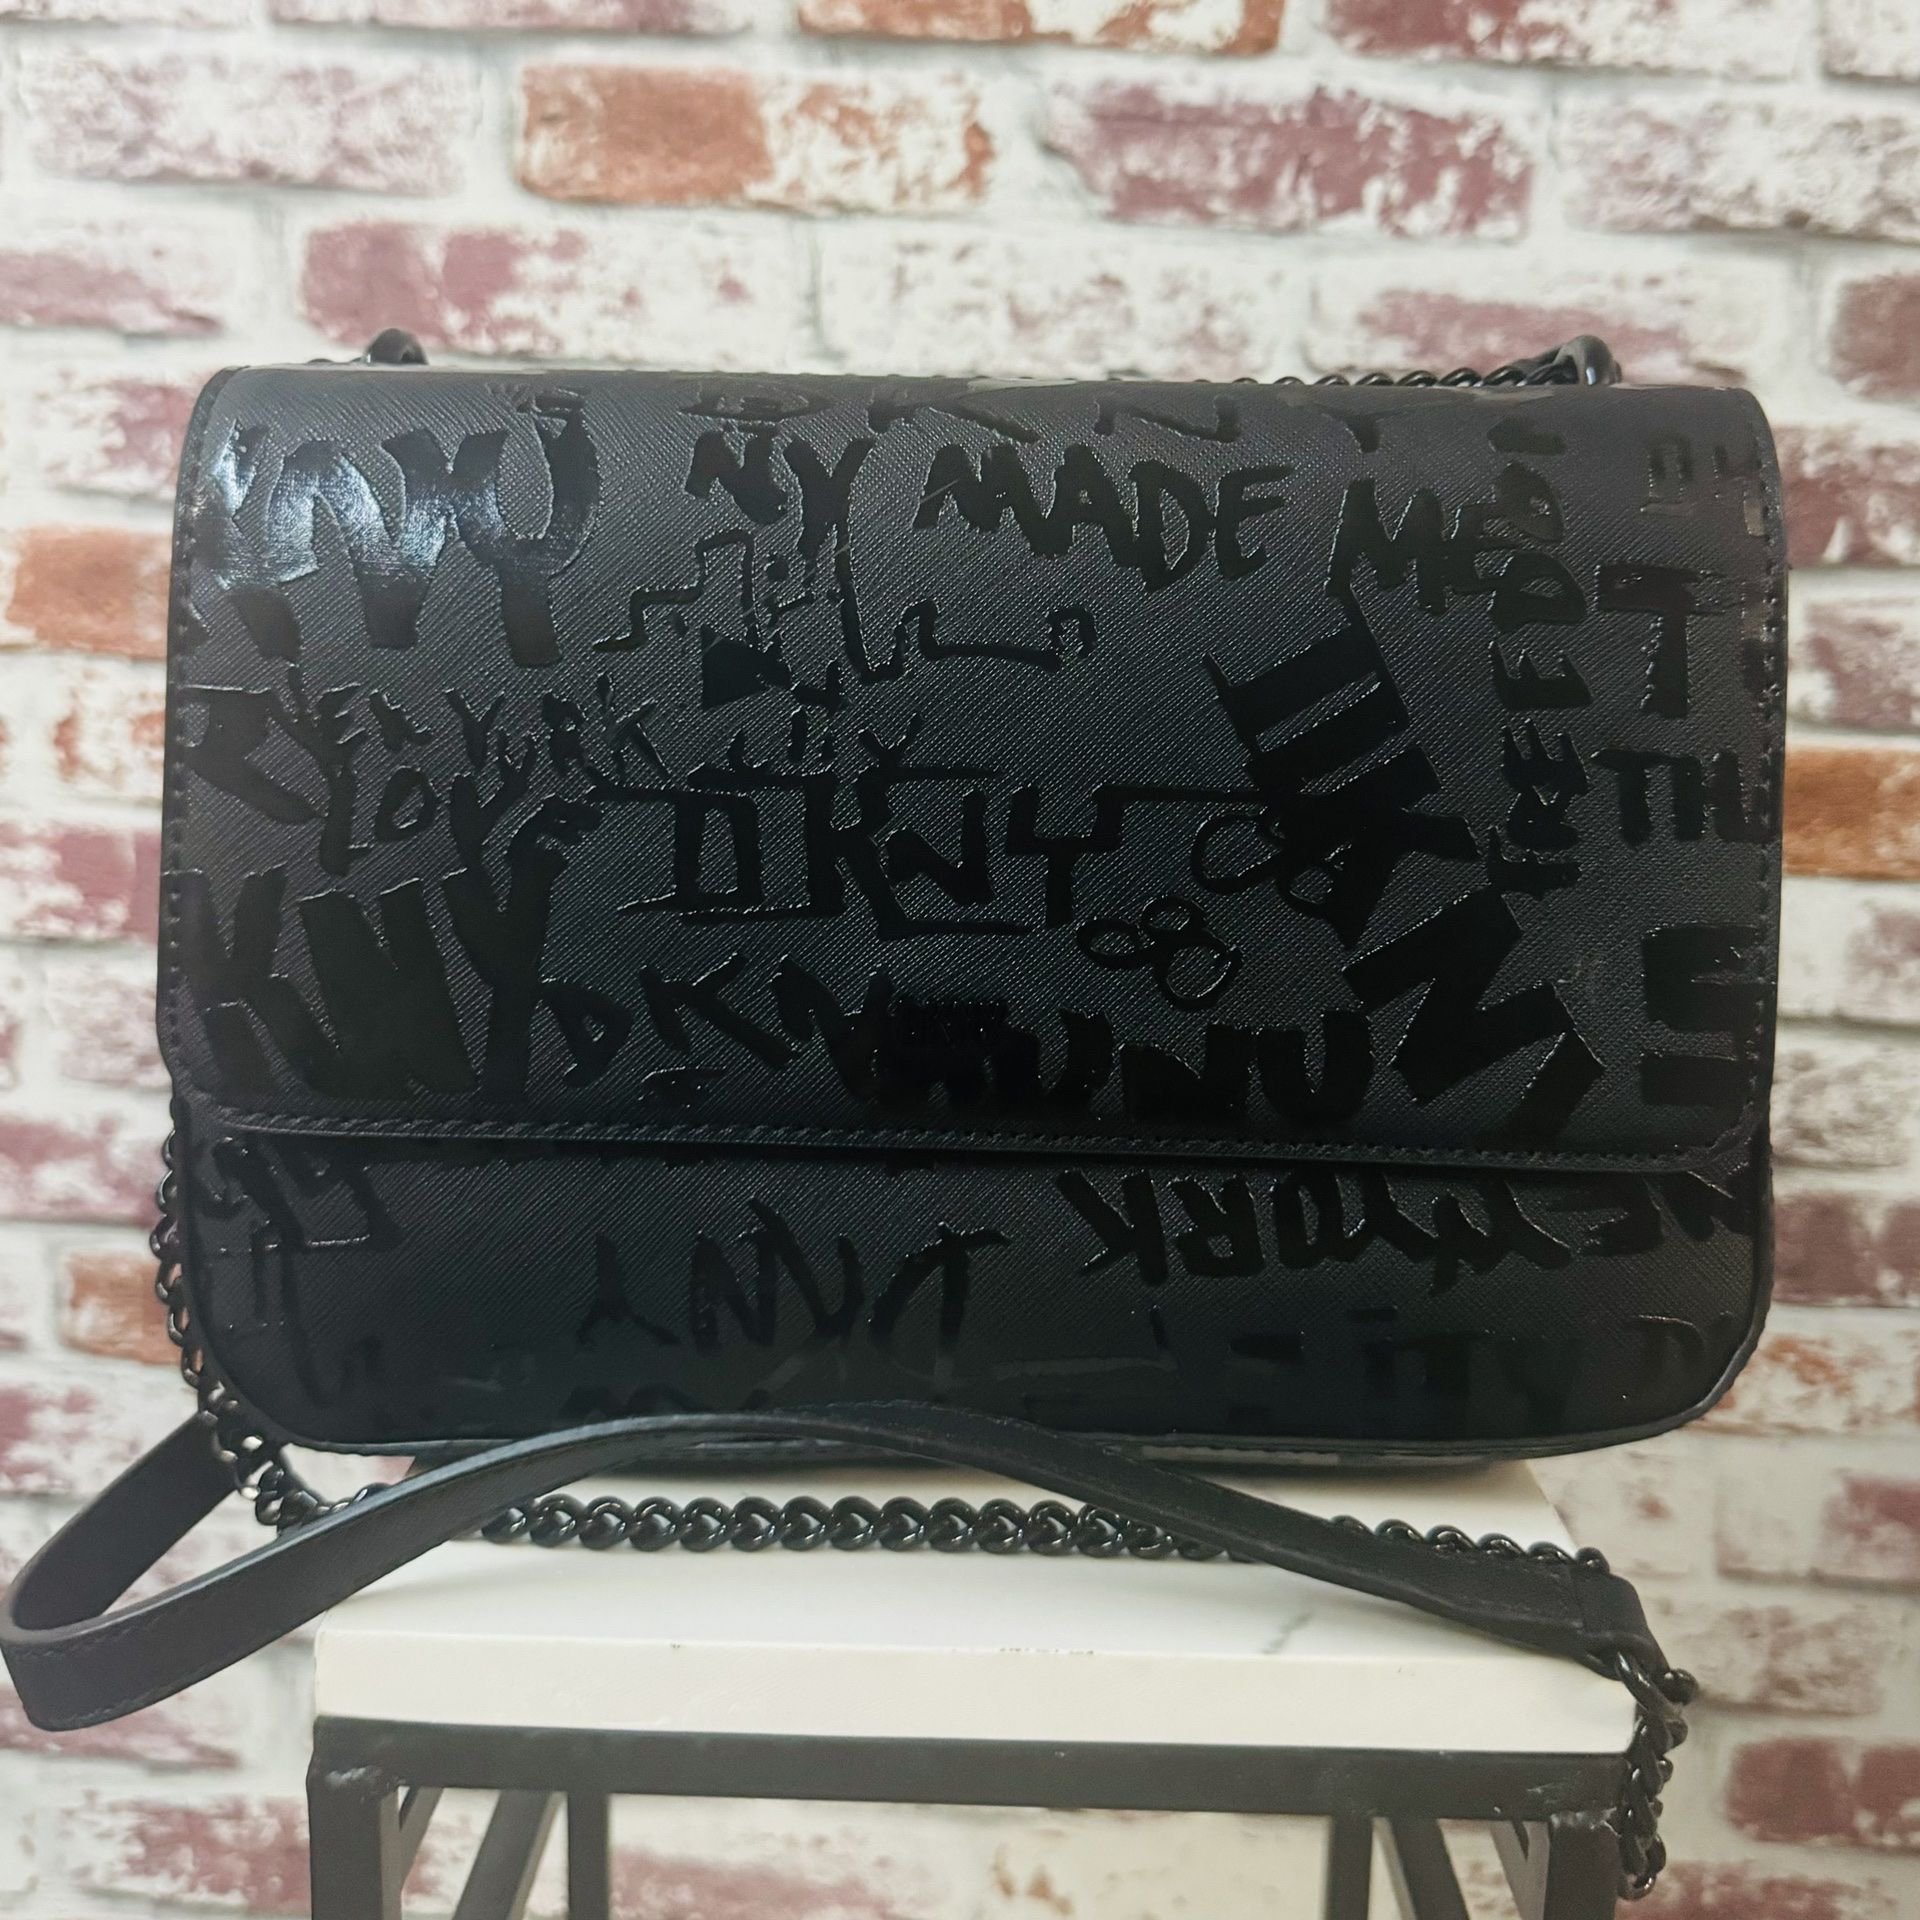 DKNY tote bag purse 178 Worth